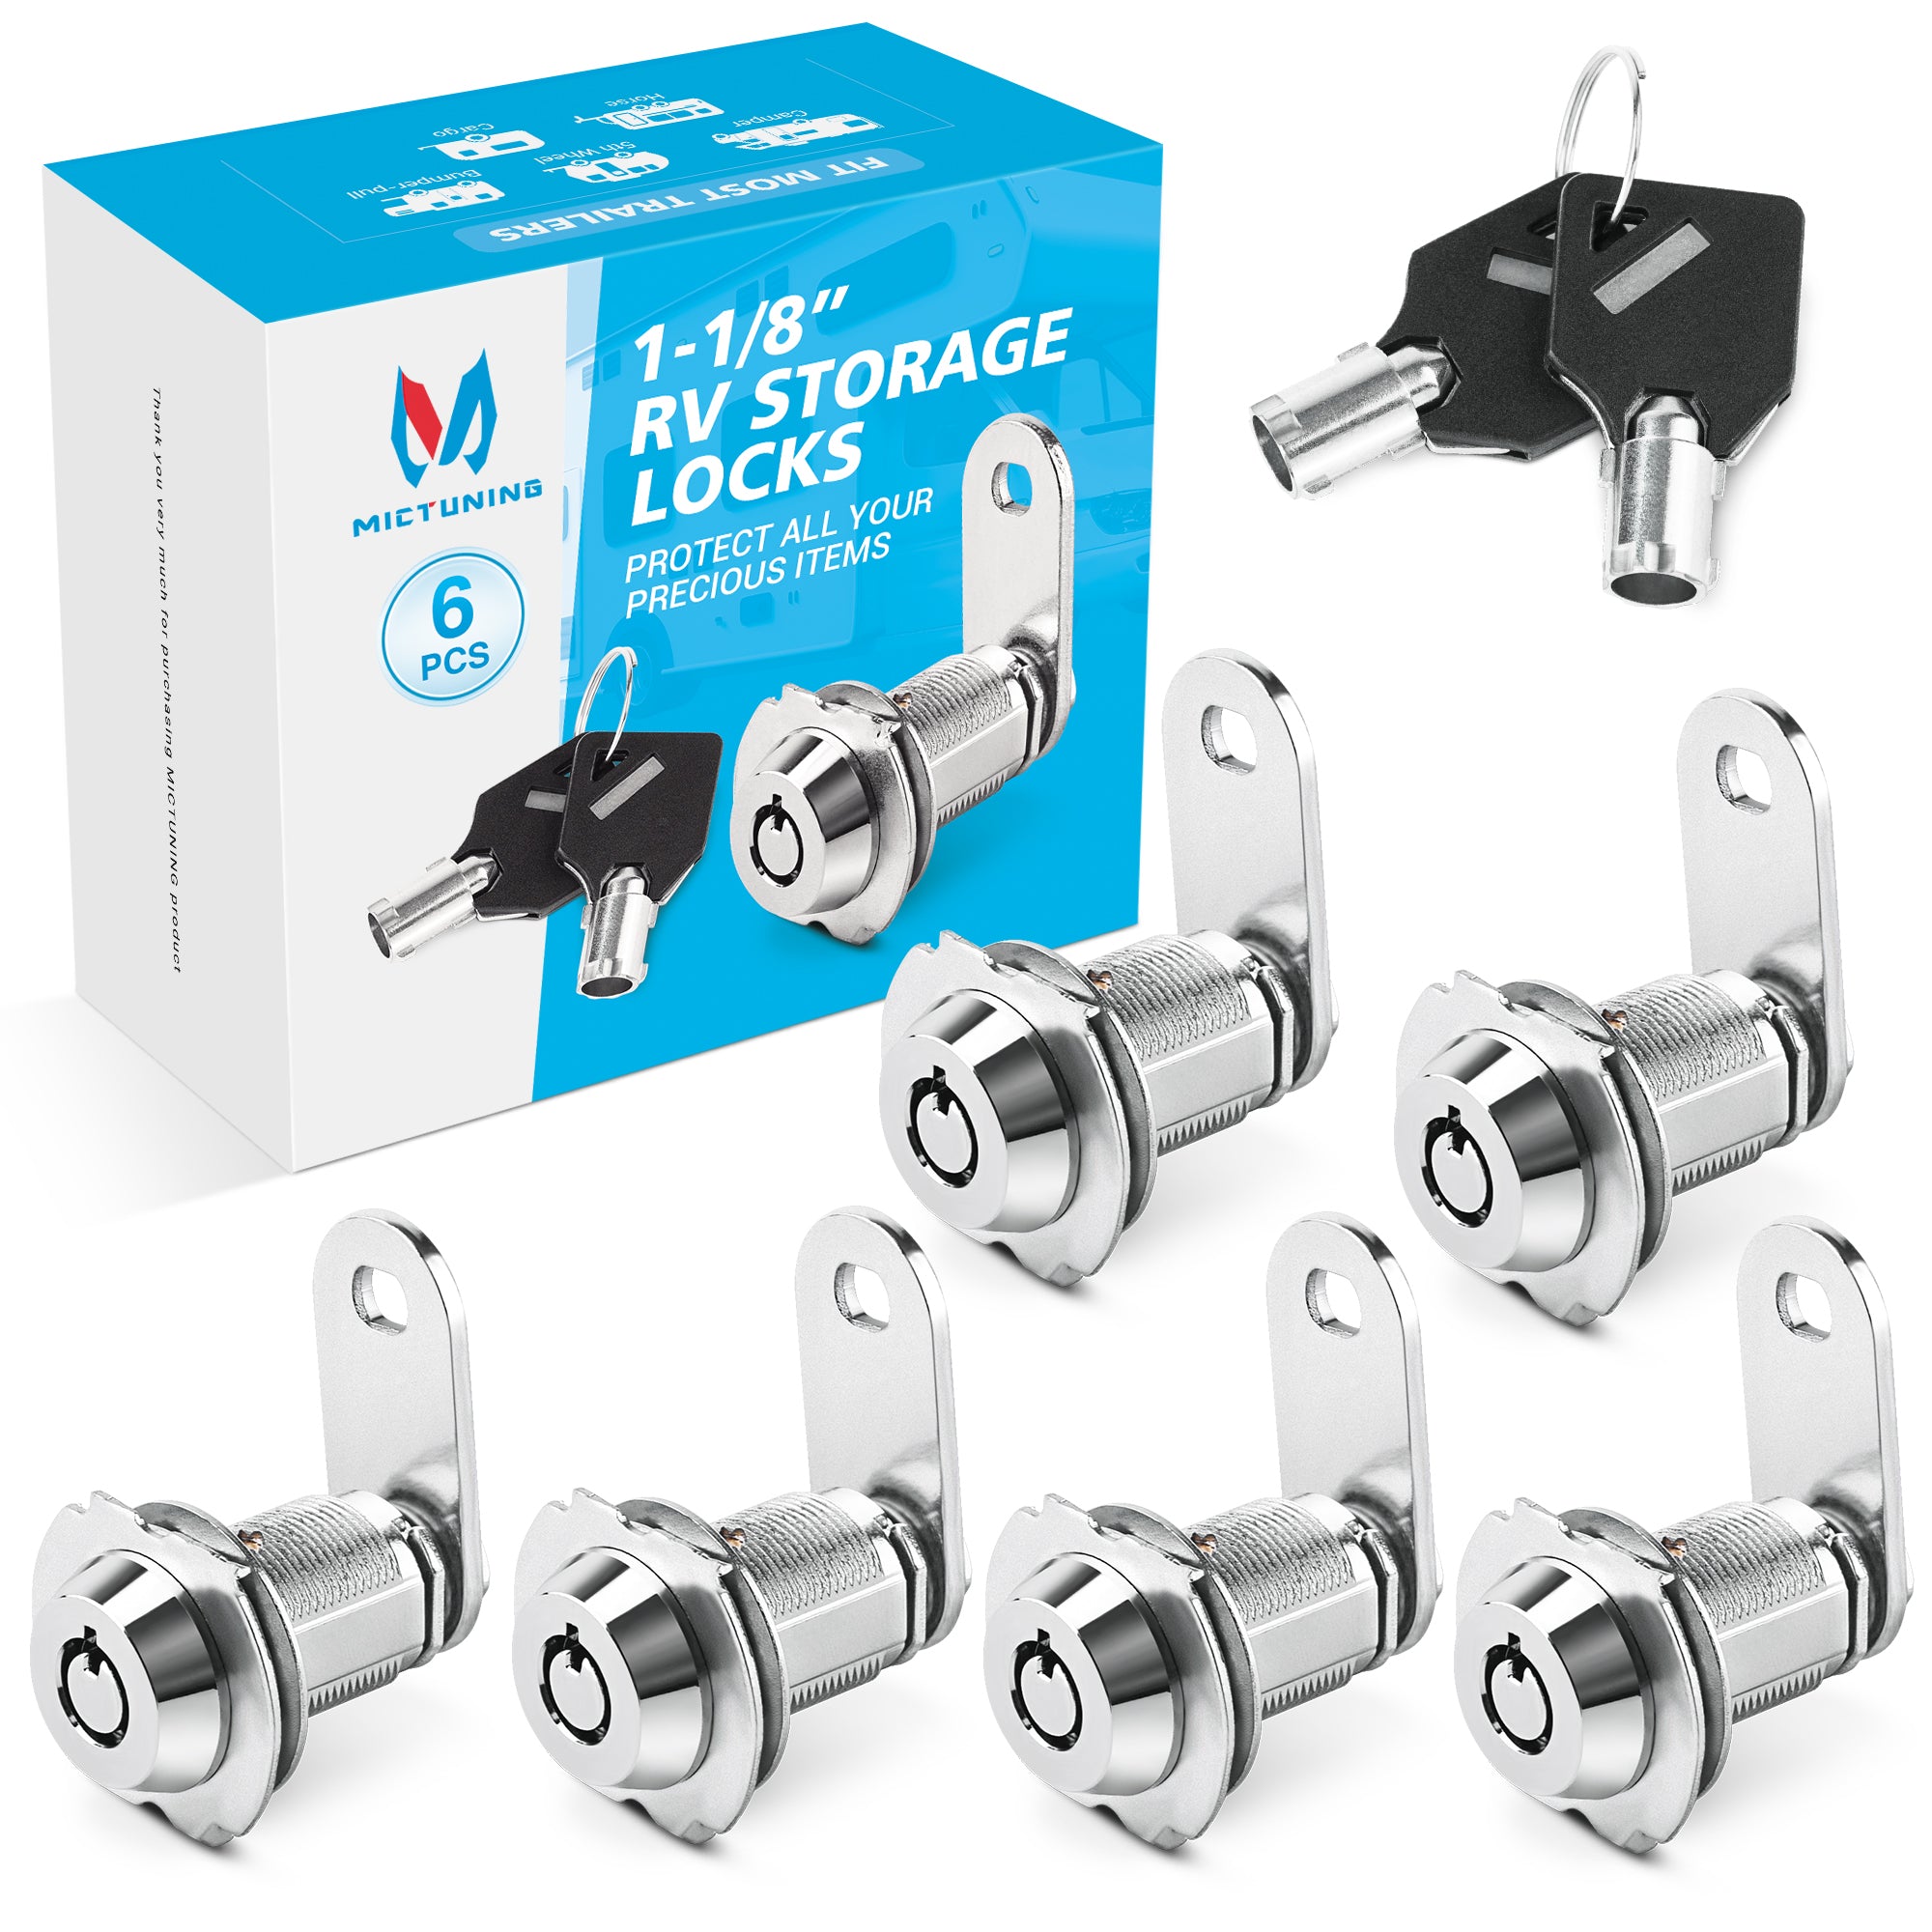 1-1/8" RV Storage Locks 6 Pack, 100% Metal Utility Tubular Cam Lock, File Cabinet Drawer Dresser Mailbox RV Compartment Lock with 12 Keys